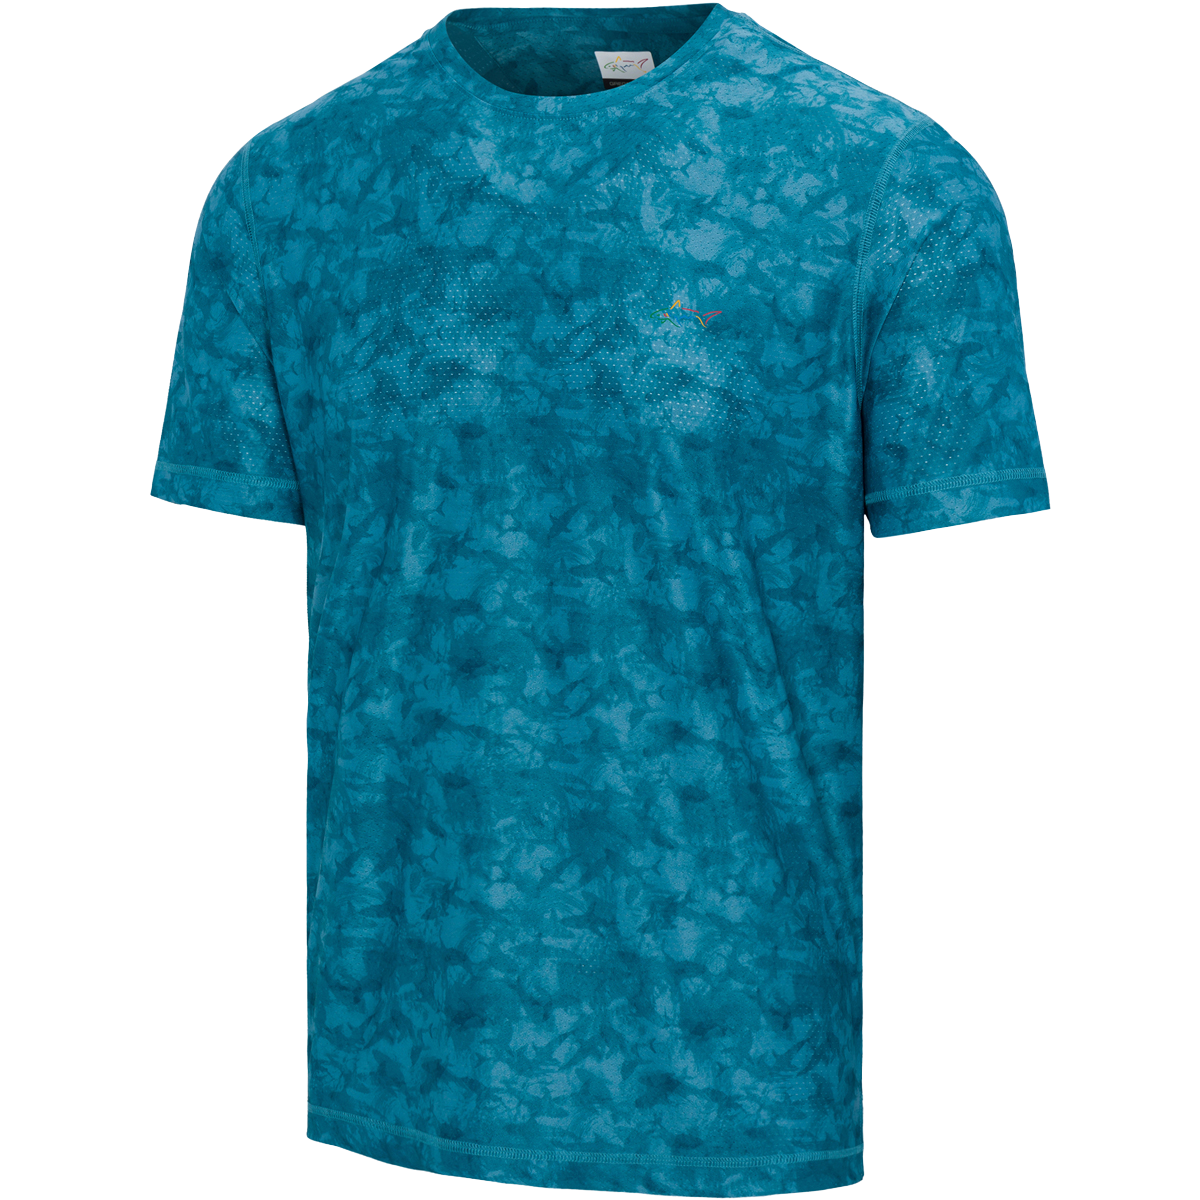 Solar XP Swimming Shark T-Shirt - Greg Norman Collection